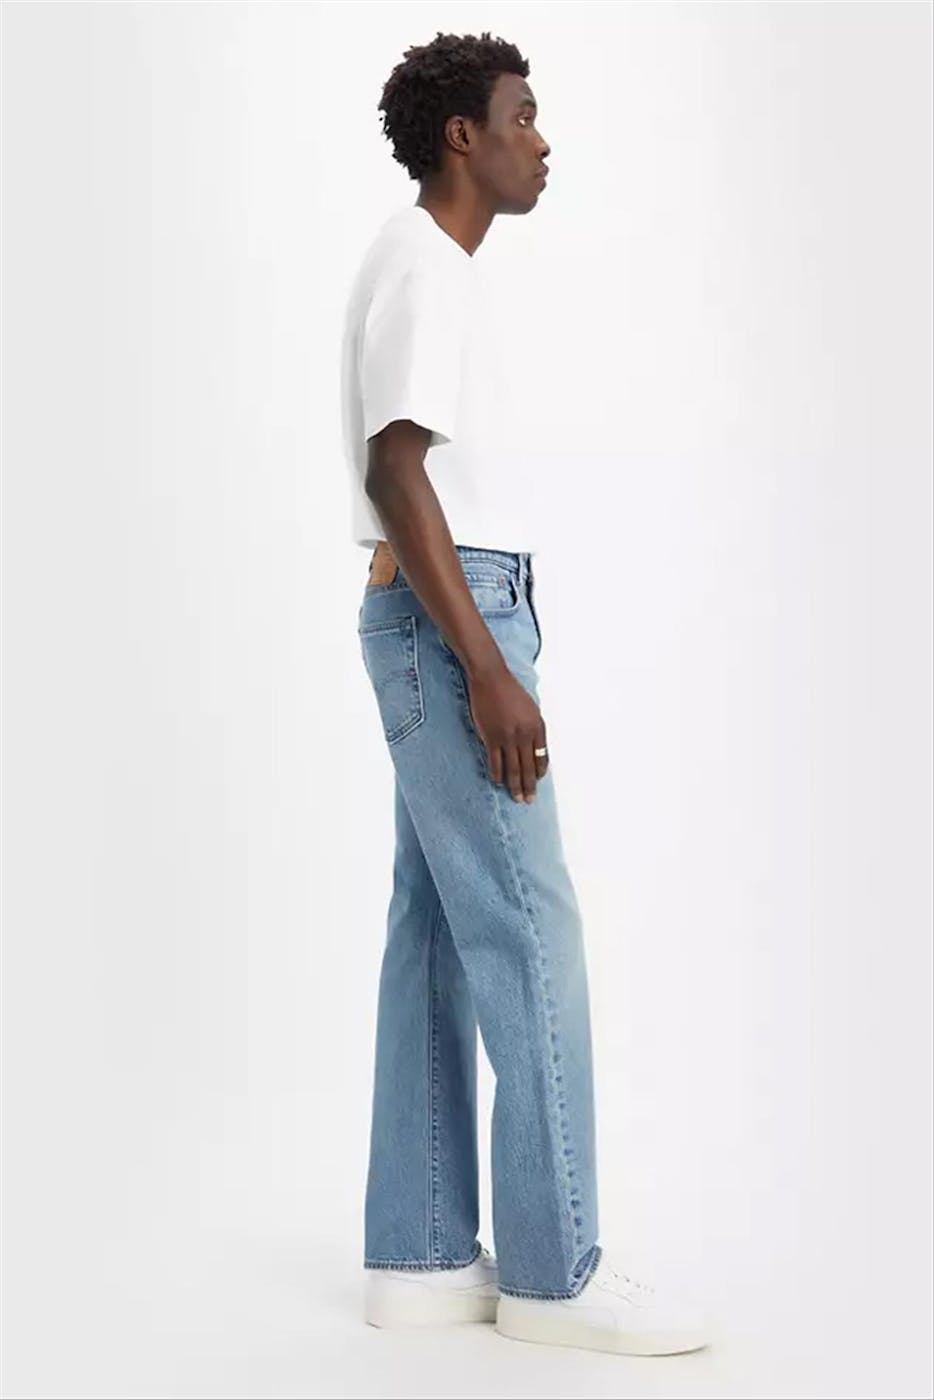 Levi's - Lichtblauwe 527 Slim Bootcut jeans